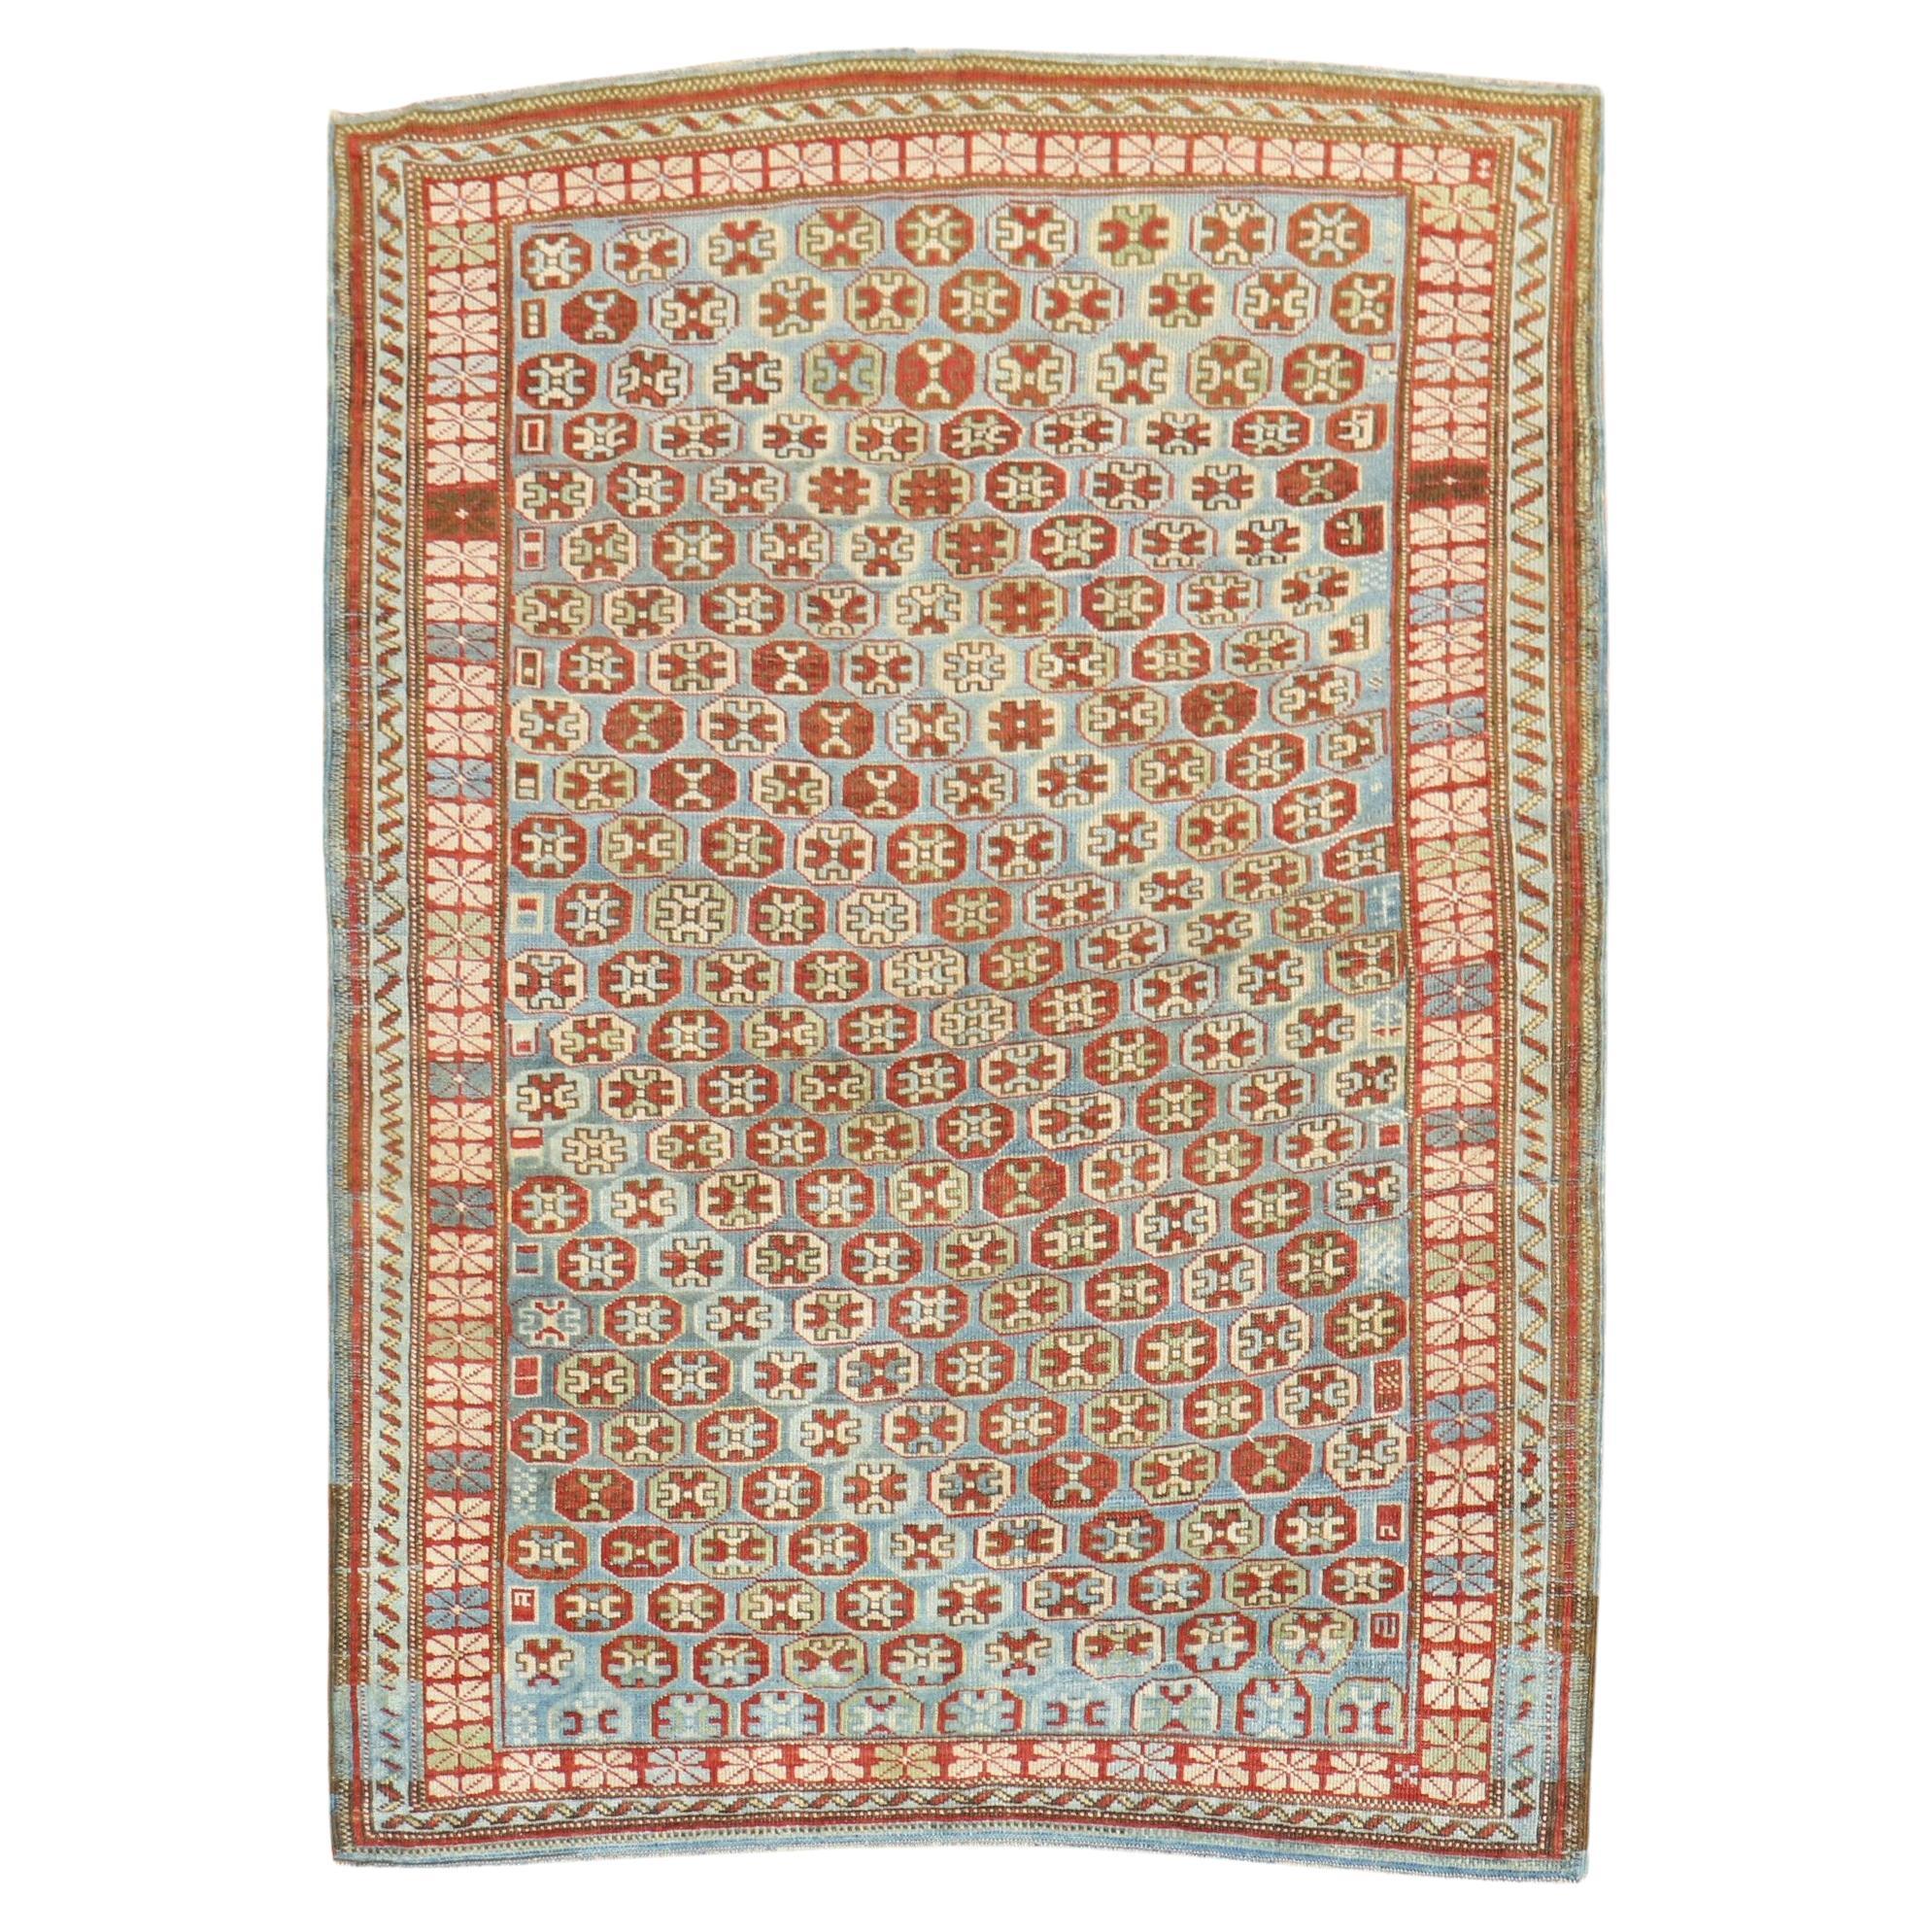 Blauer antiker kaukasischer Kuba-Teppich aus dem 19.